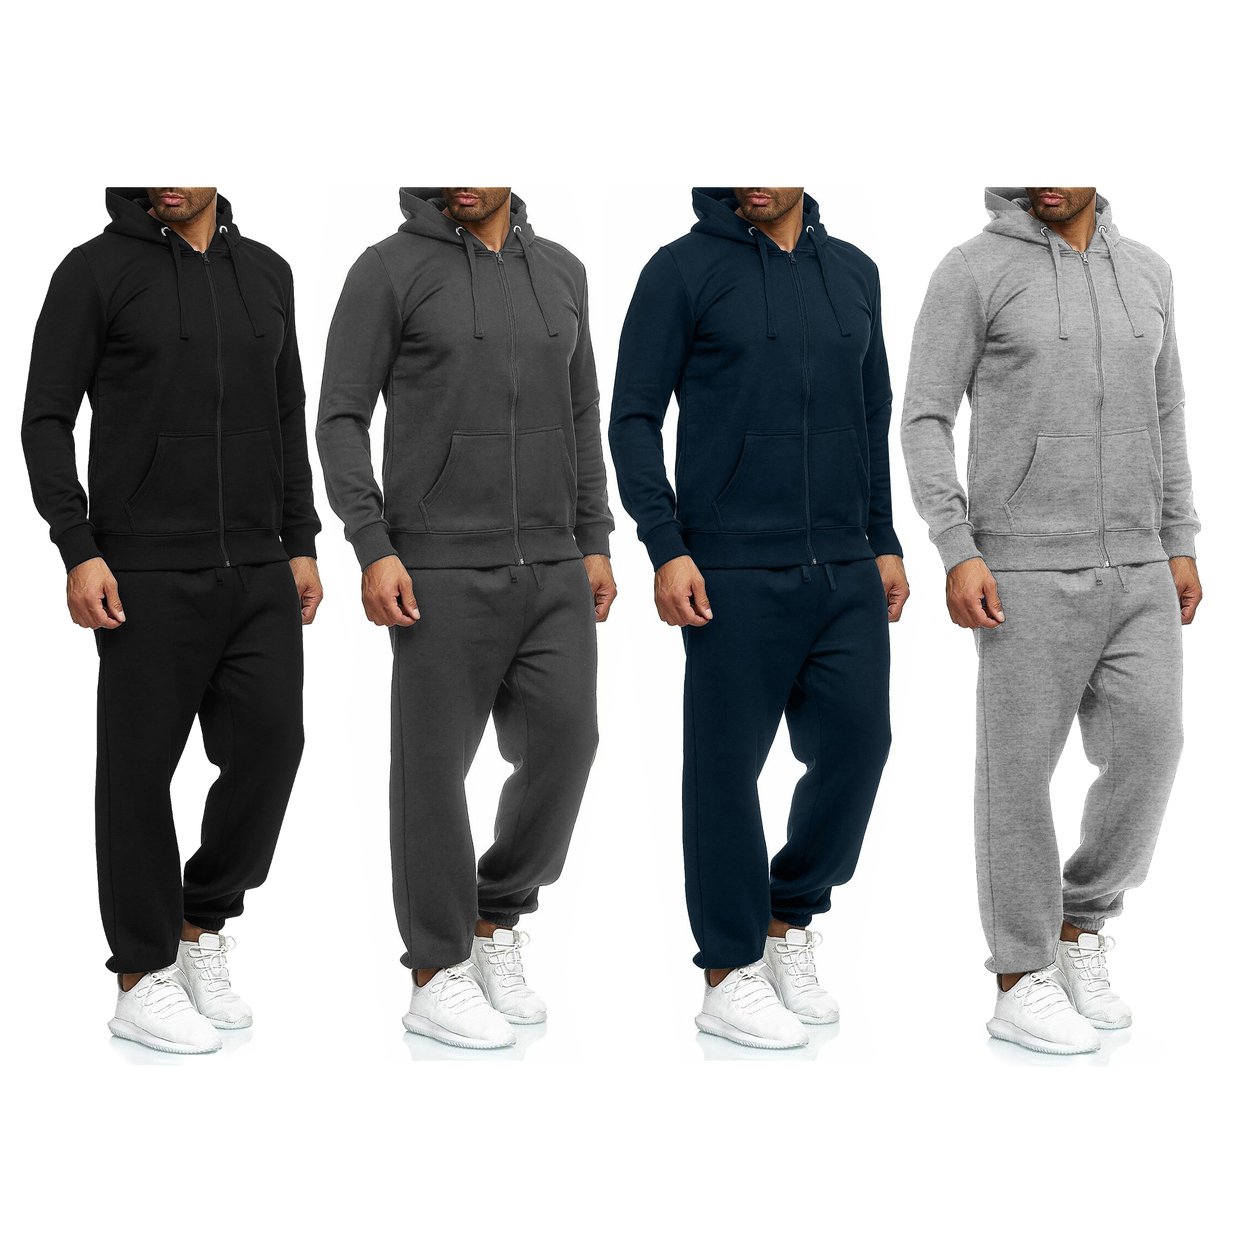 2/4-Piece: Men's Winter Warm Cozy Athletic Multi-Pockets BIG & TALL Sweatsuit Set - Grey, 1, Large